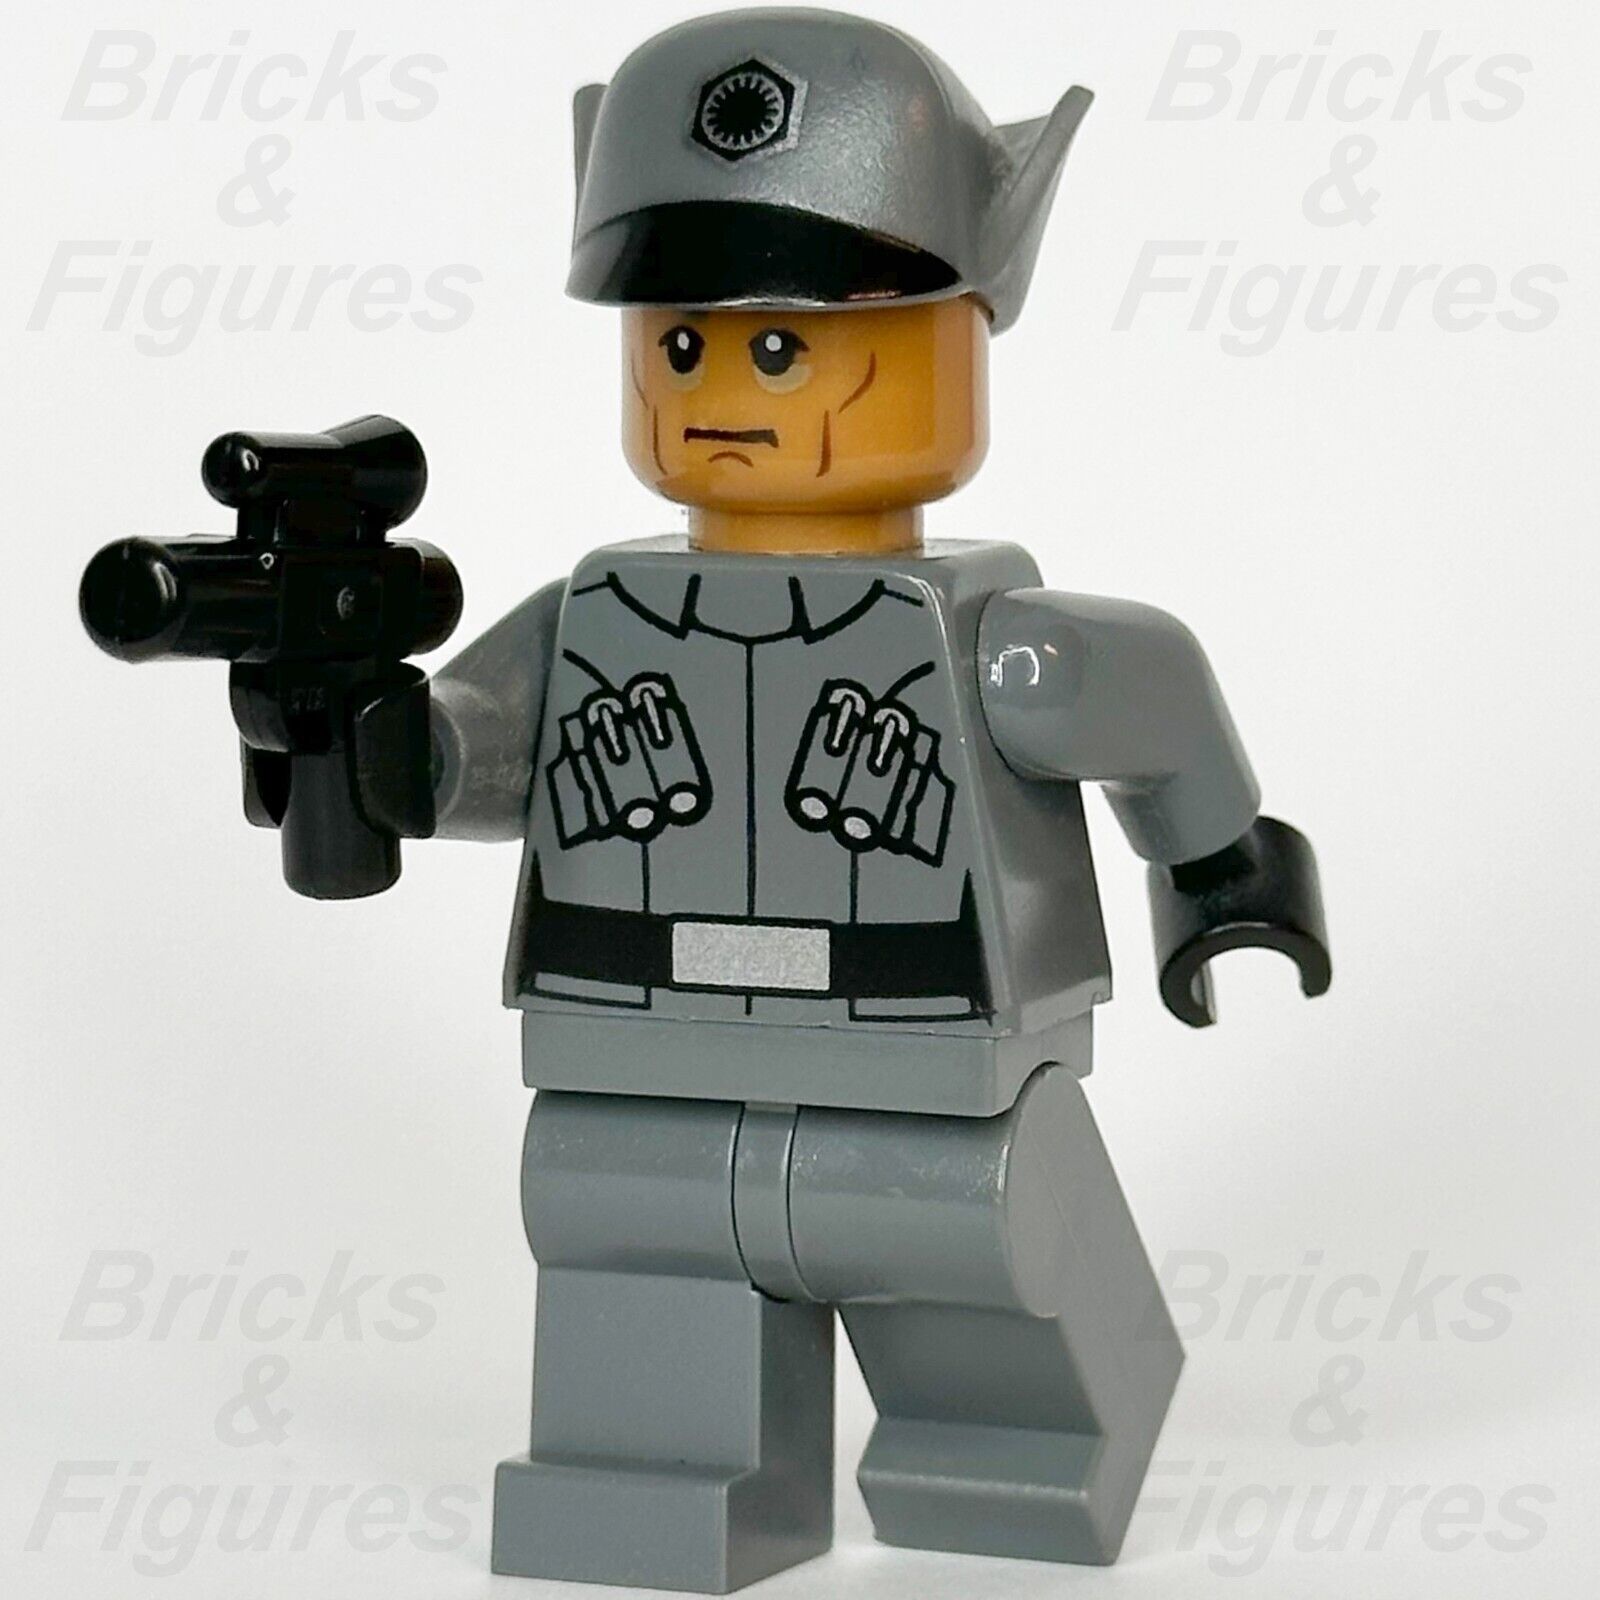 LEGO Star Wars First Order Officer Minifigure Lieutenant Captain 75101 sw0670